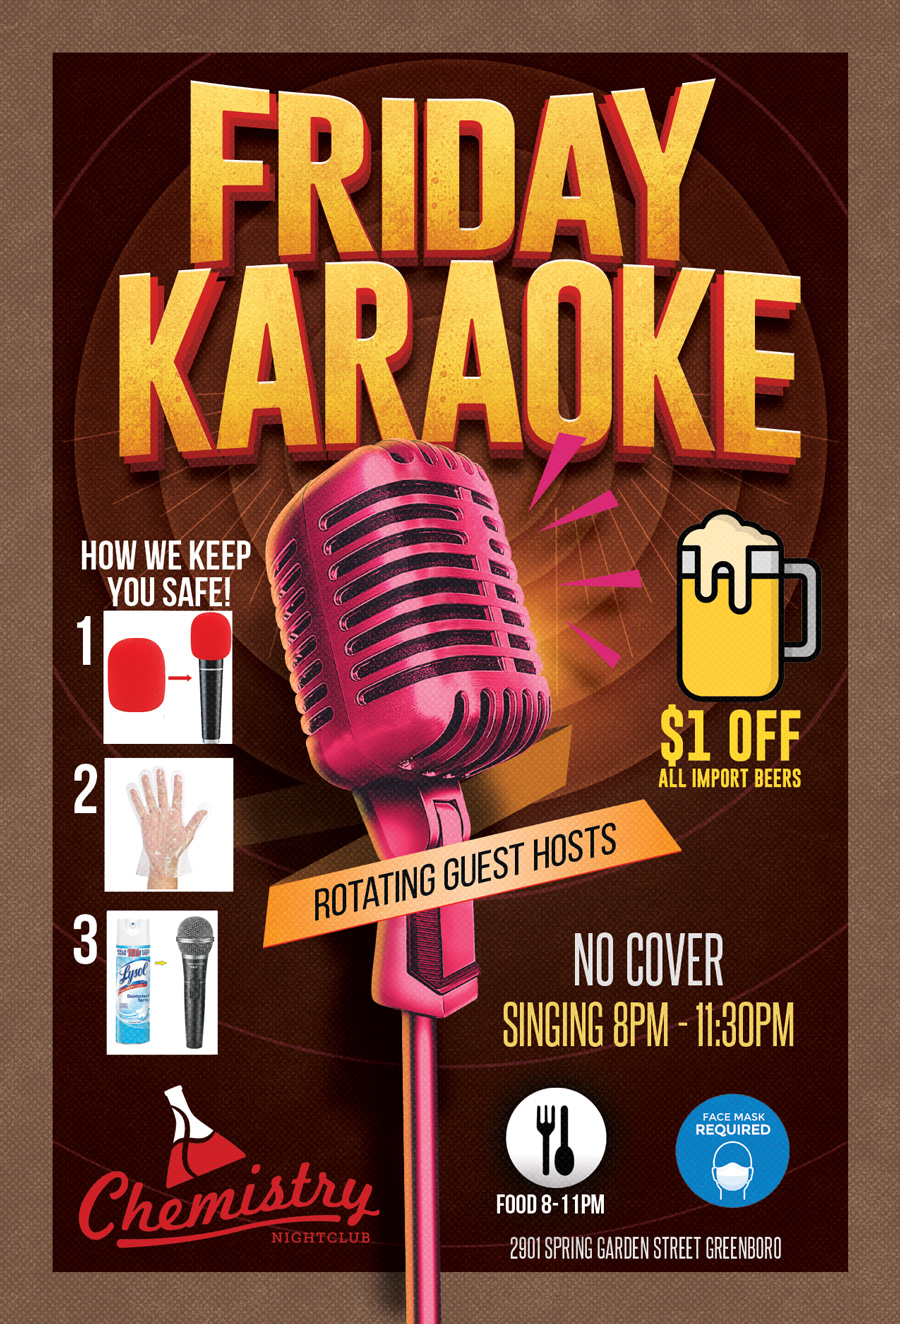 Karaoke Fridays 2020 Covid